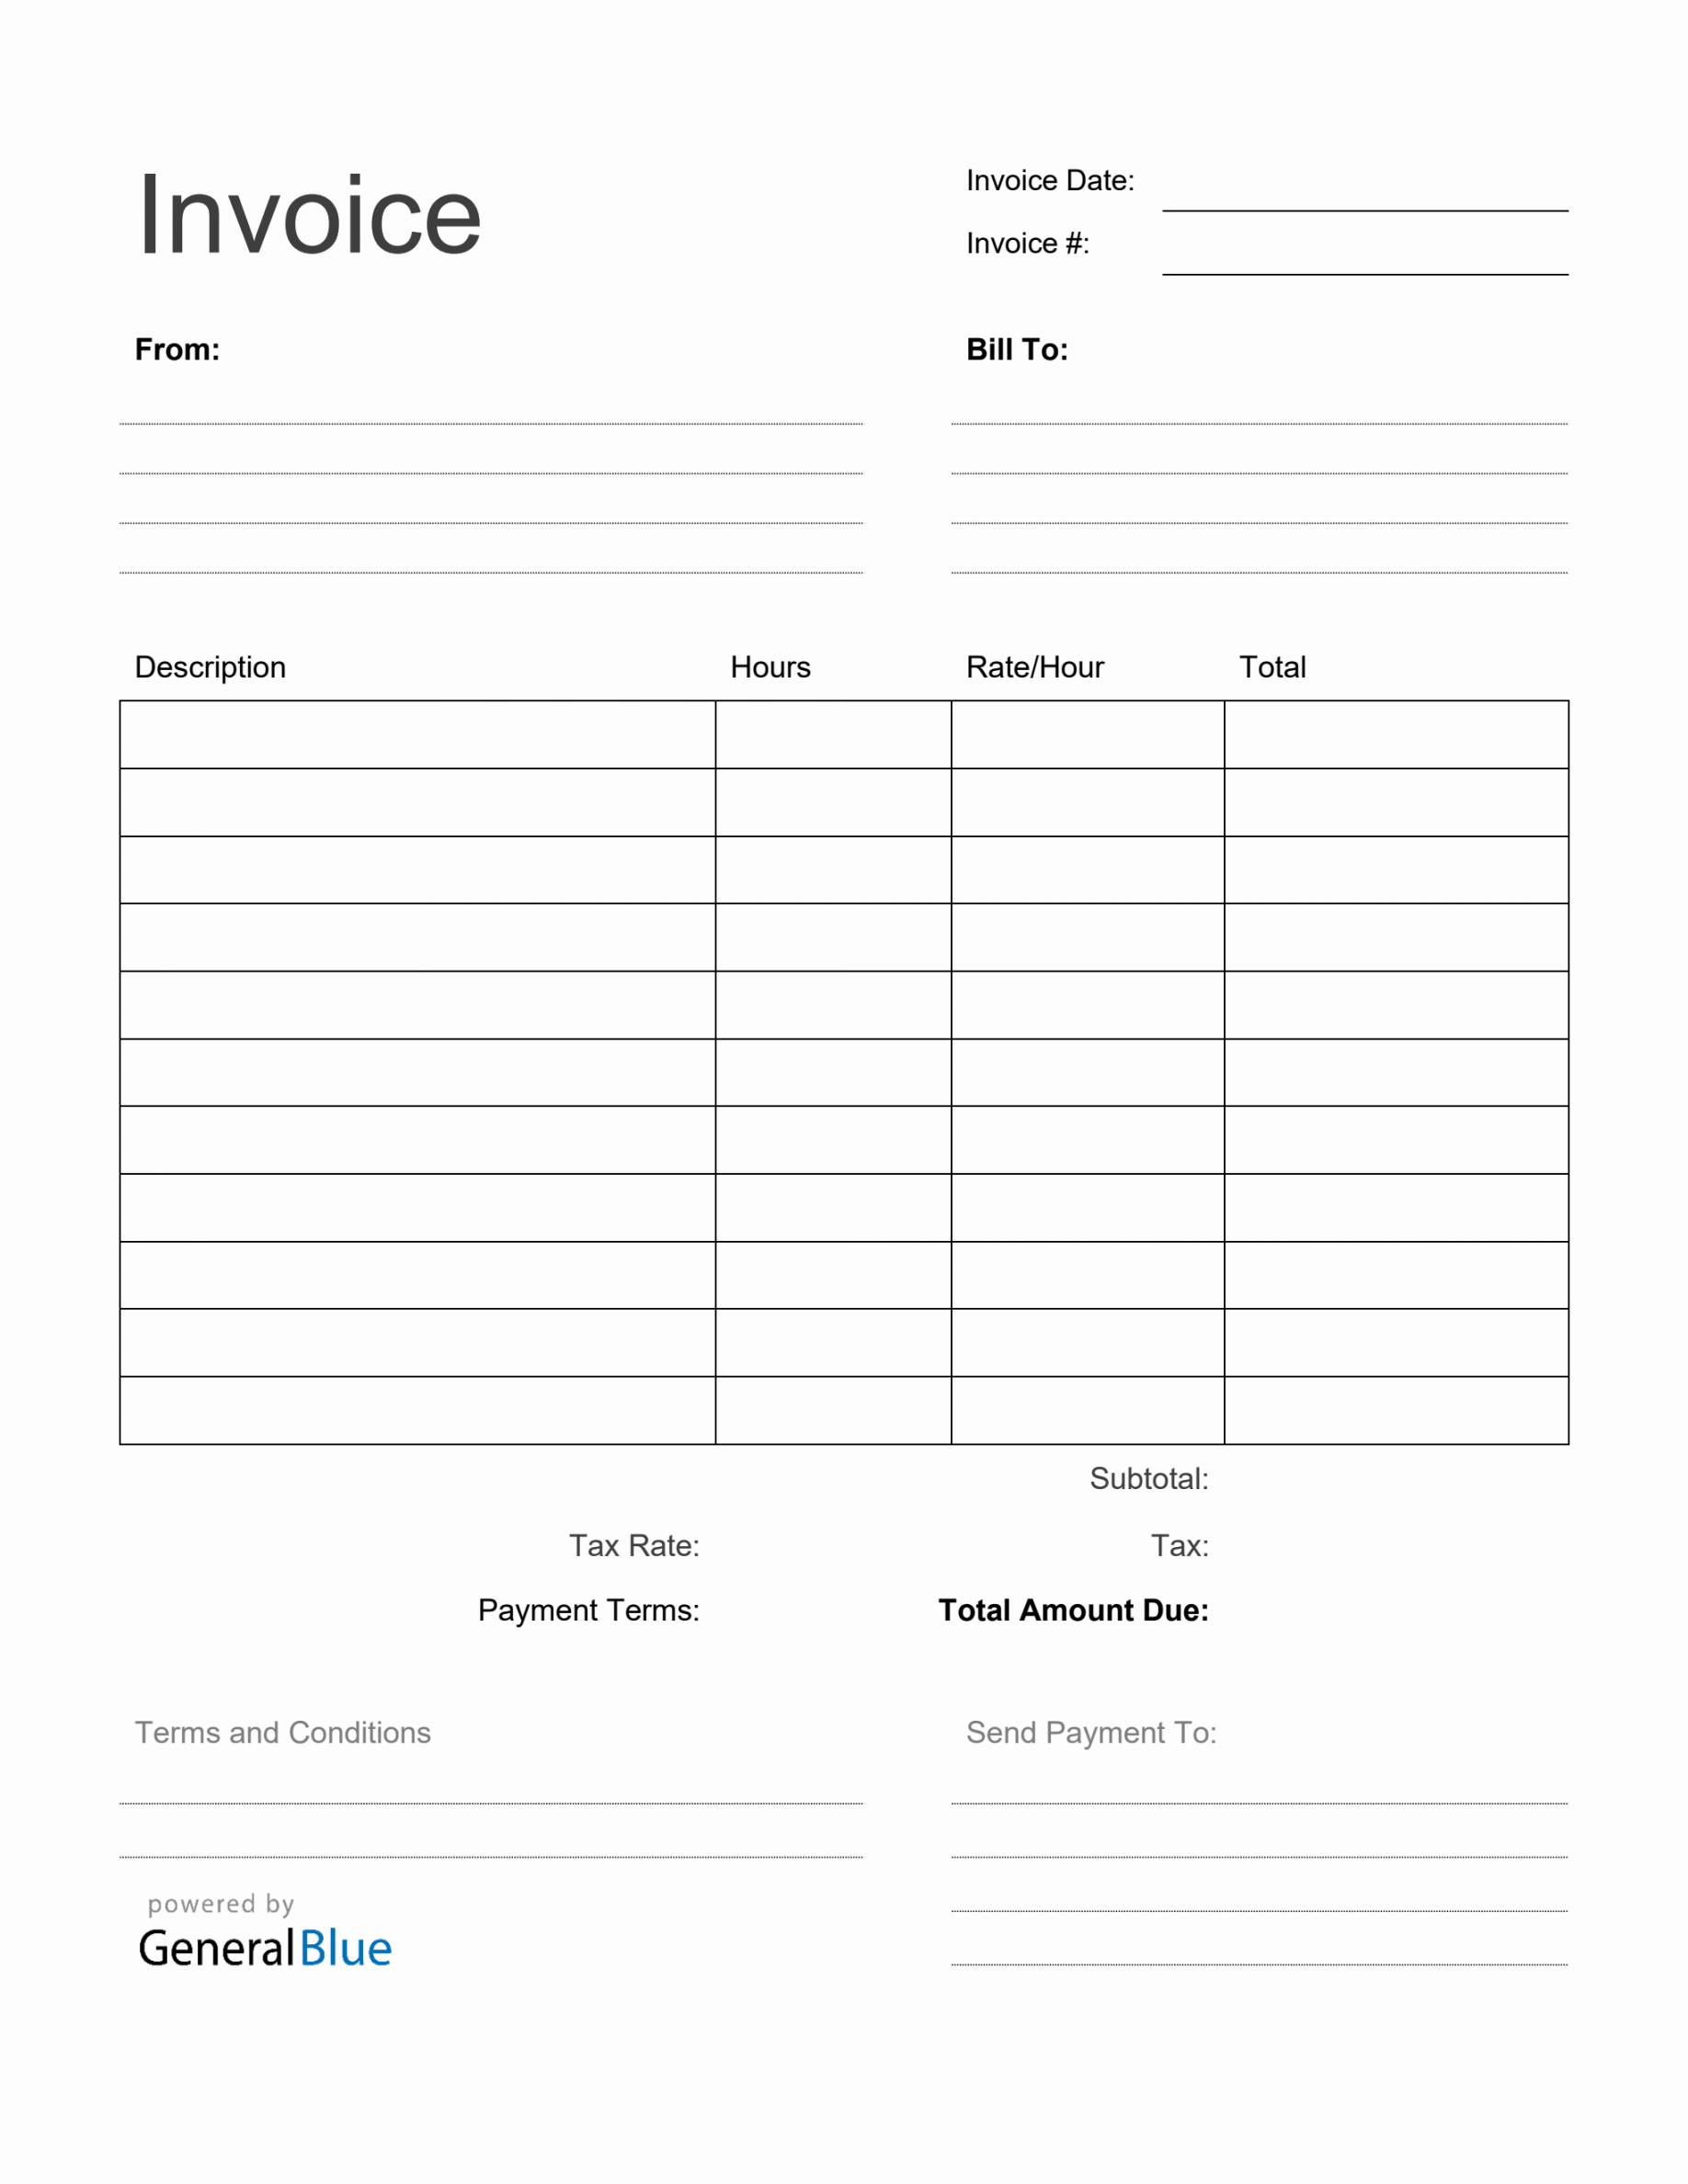 Printable Invoices Free Template - Printable - Blank Invoice Template in Word Printable